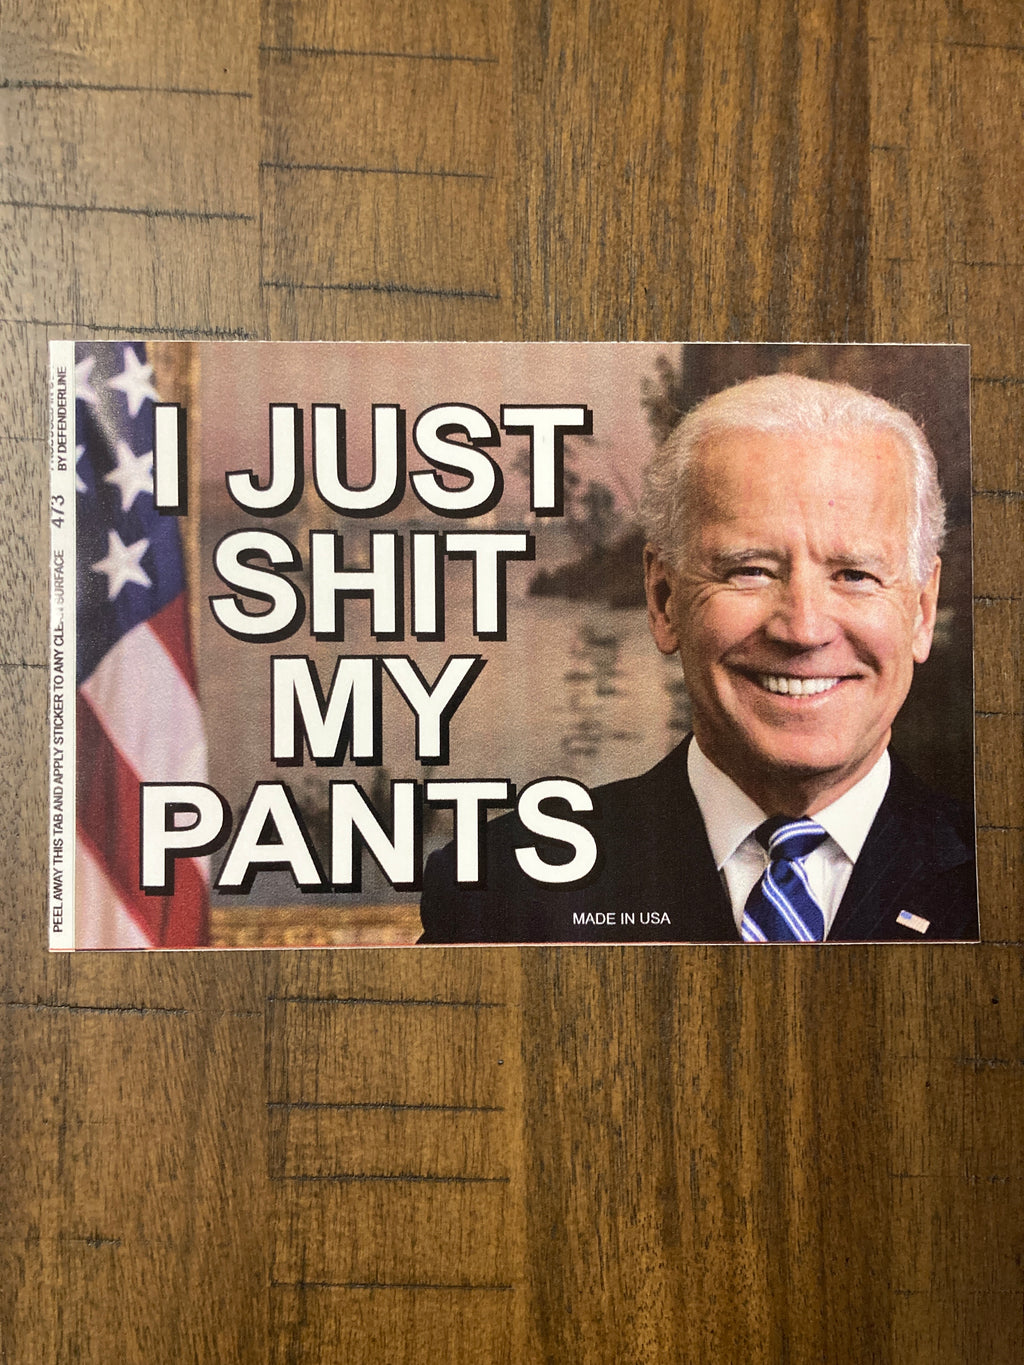 Biden "I just Sh*t My Pants" Bumper Sticker